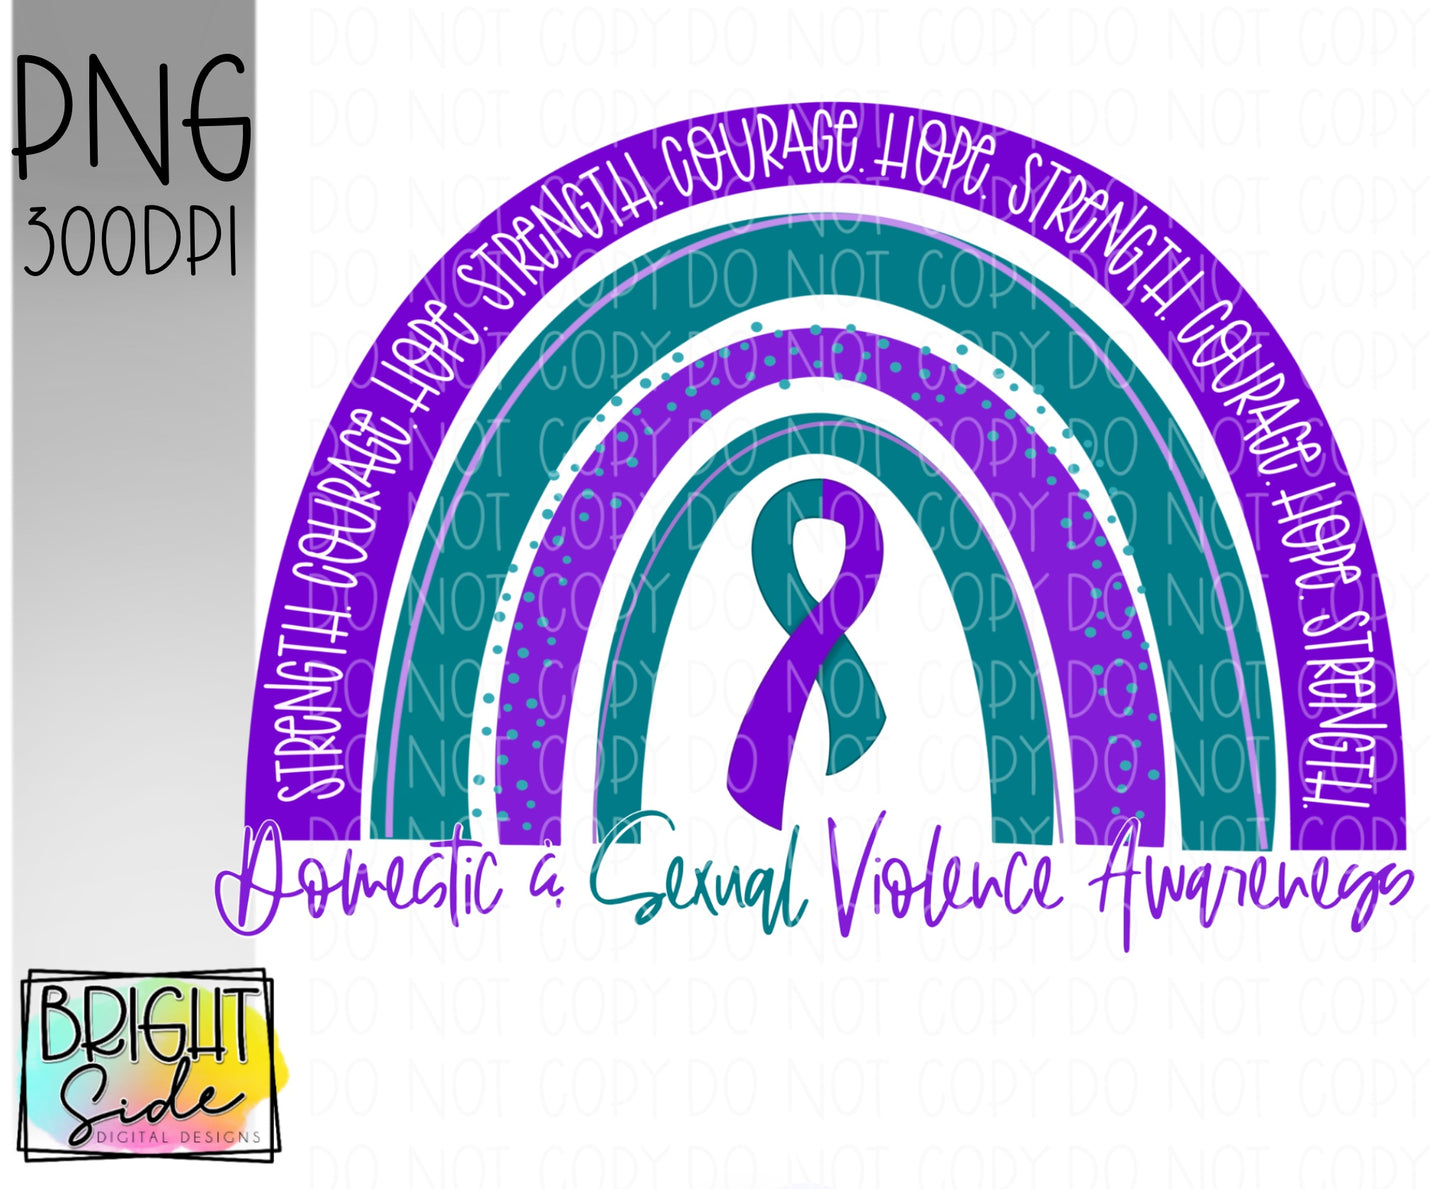 Domestic & Sexual Violence Awareness Rainbow